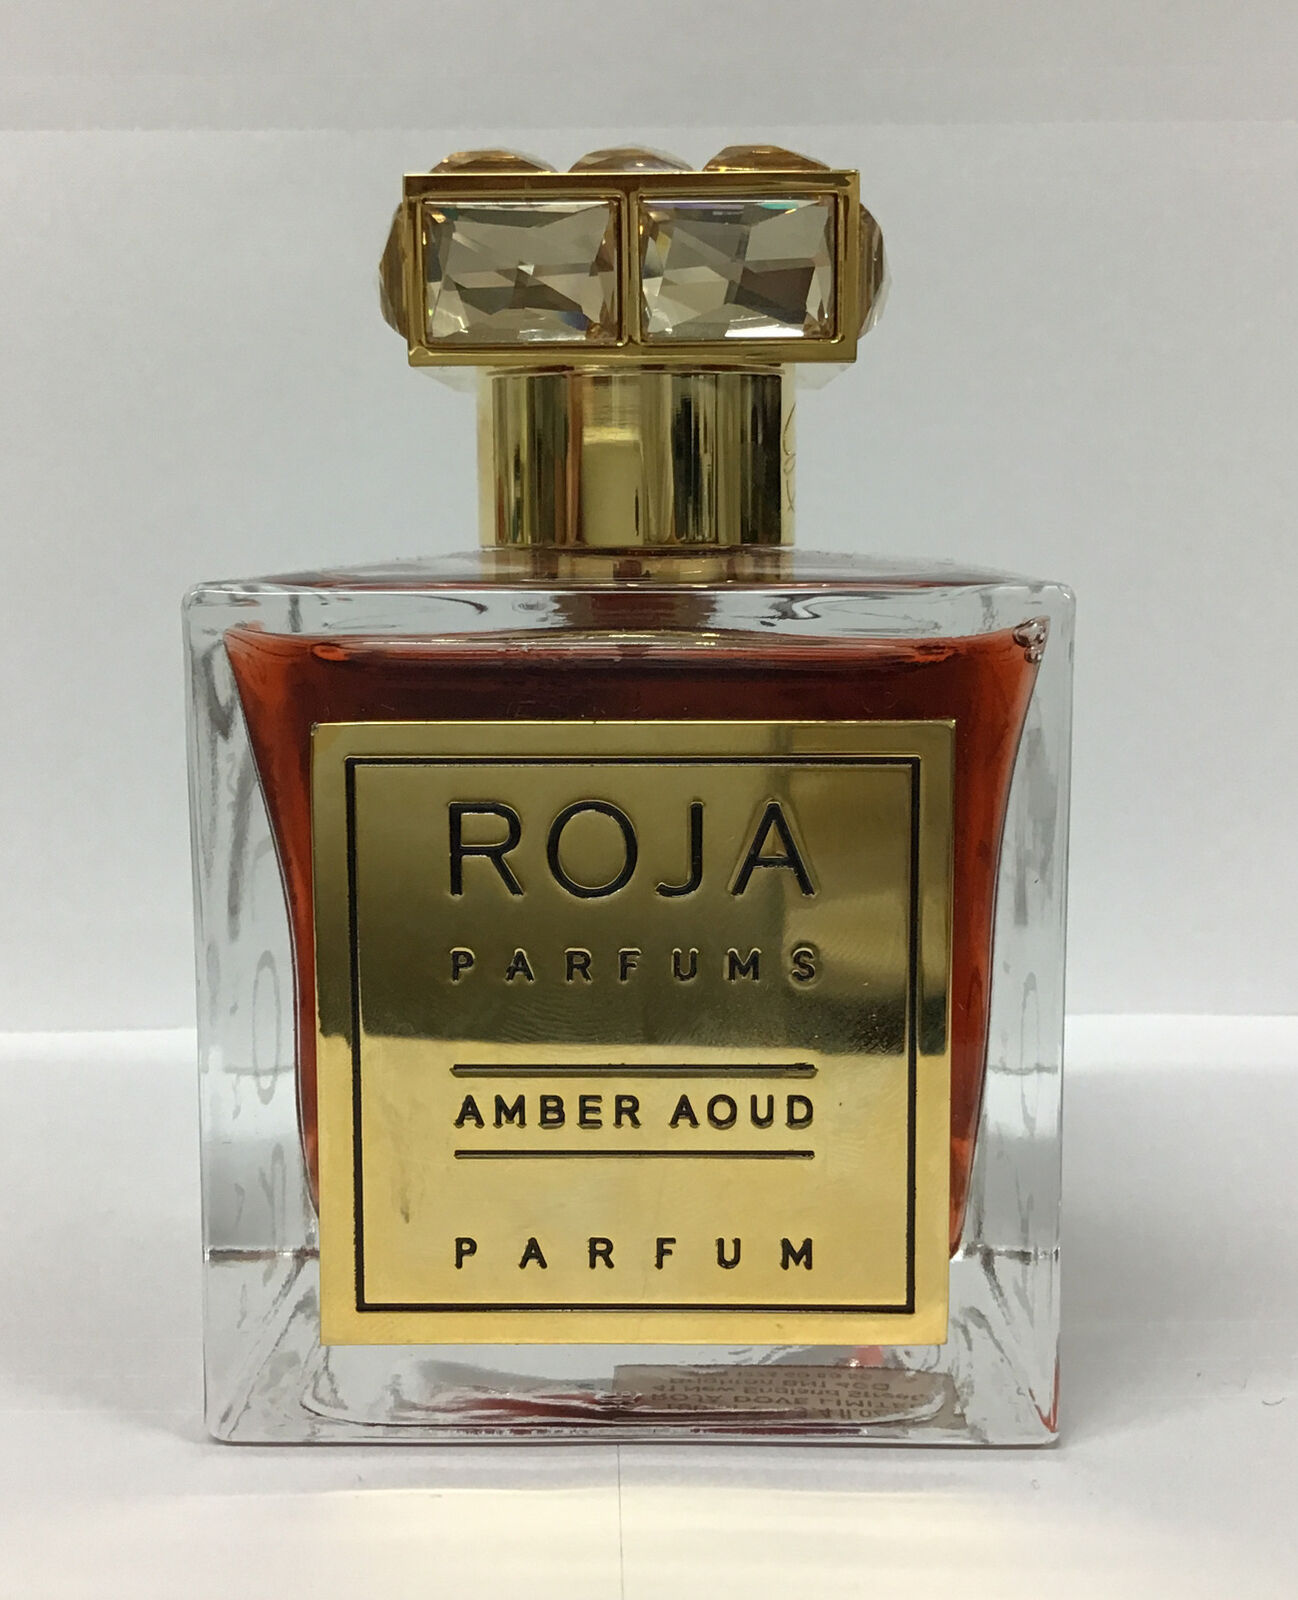 Roja Amber Aoud Eau De Parfum Spray 3.4 Fl Oz, As Pictured.